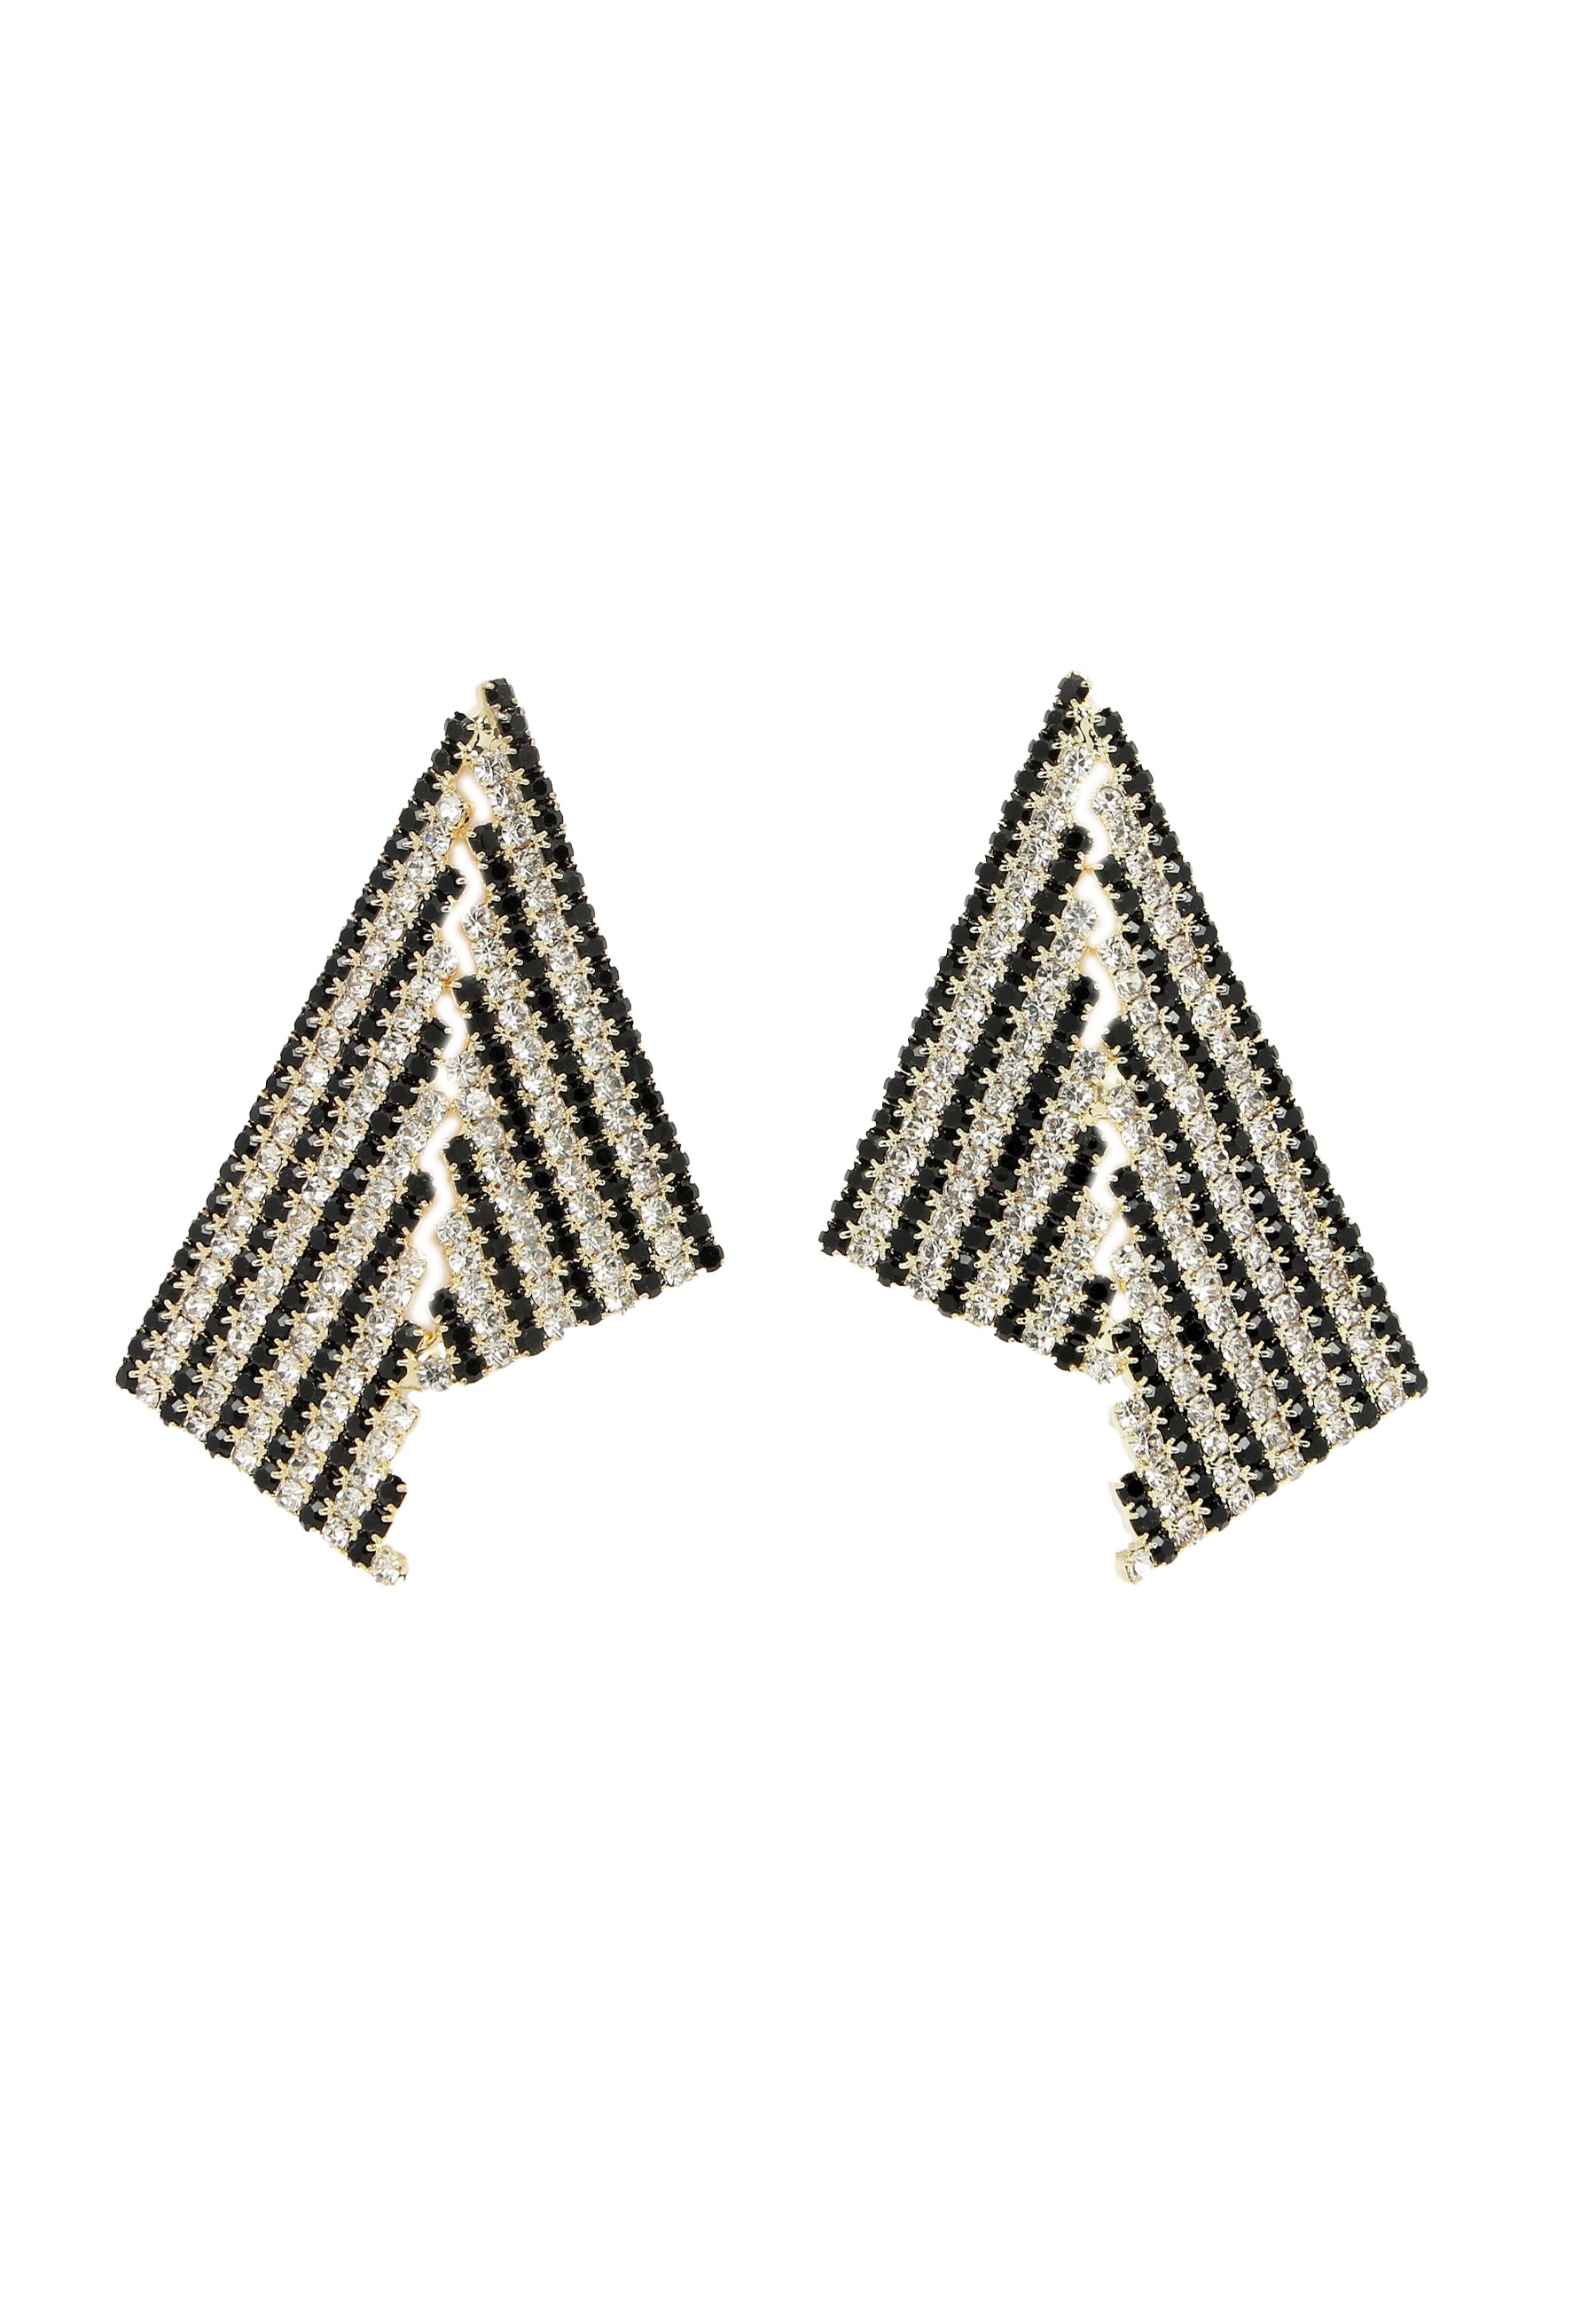 Avant-Garde Paris Asymmetrical Triangle White Crystal Earrings